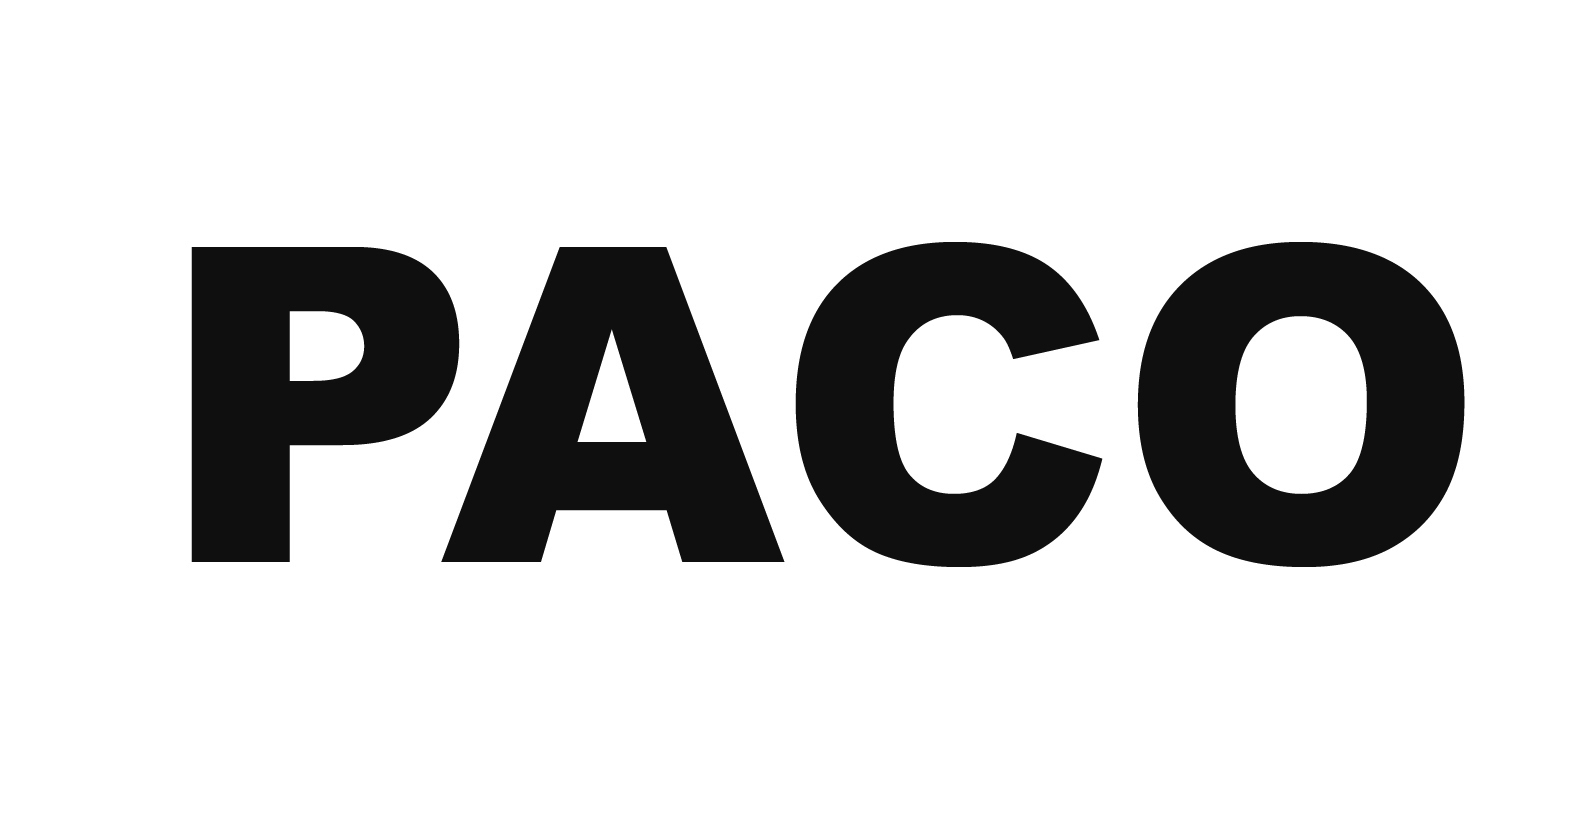 Paco logo